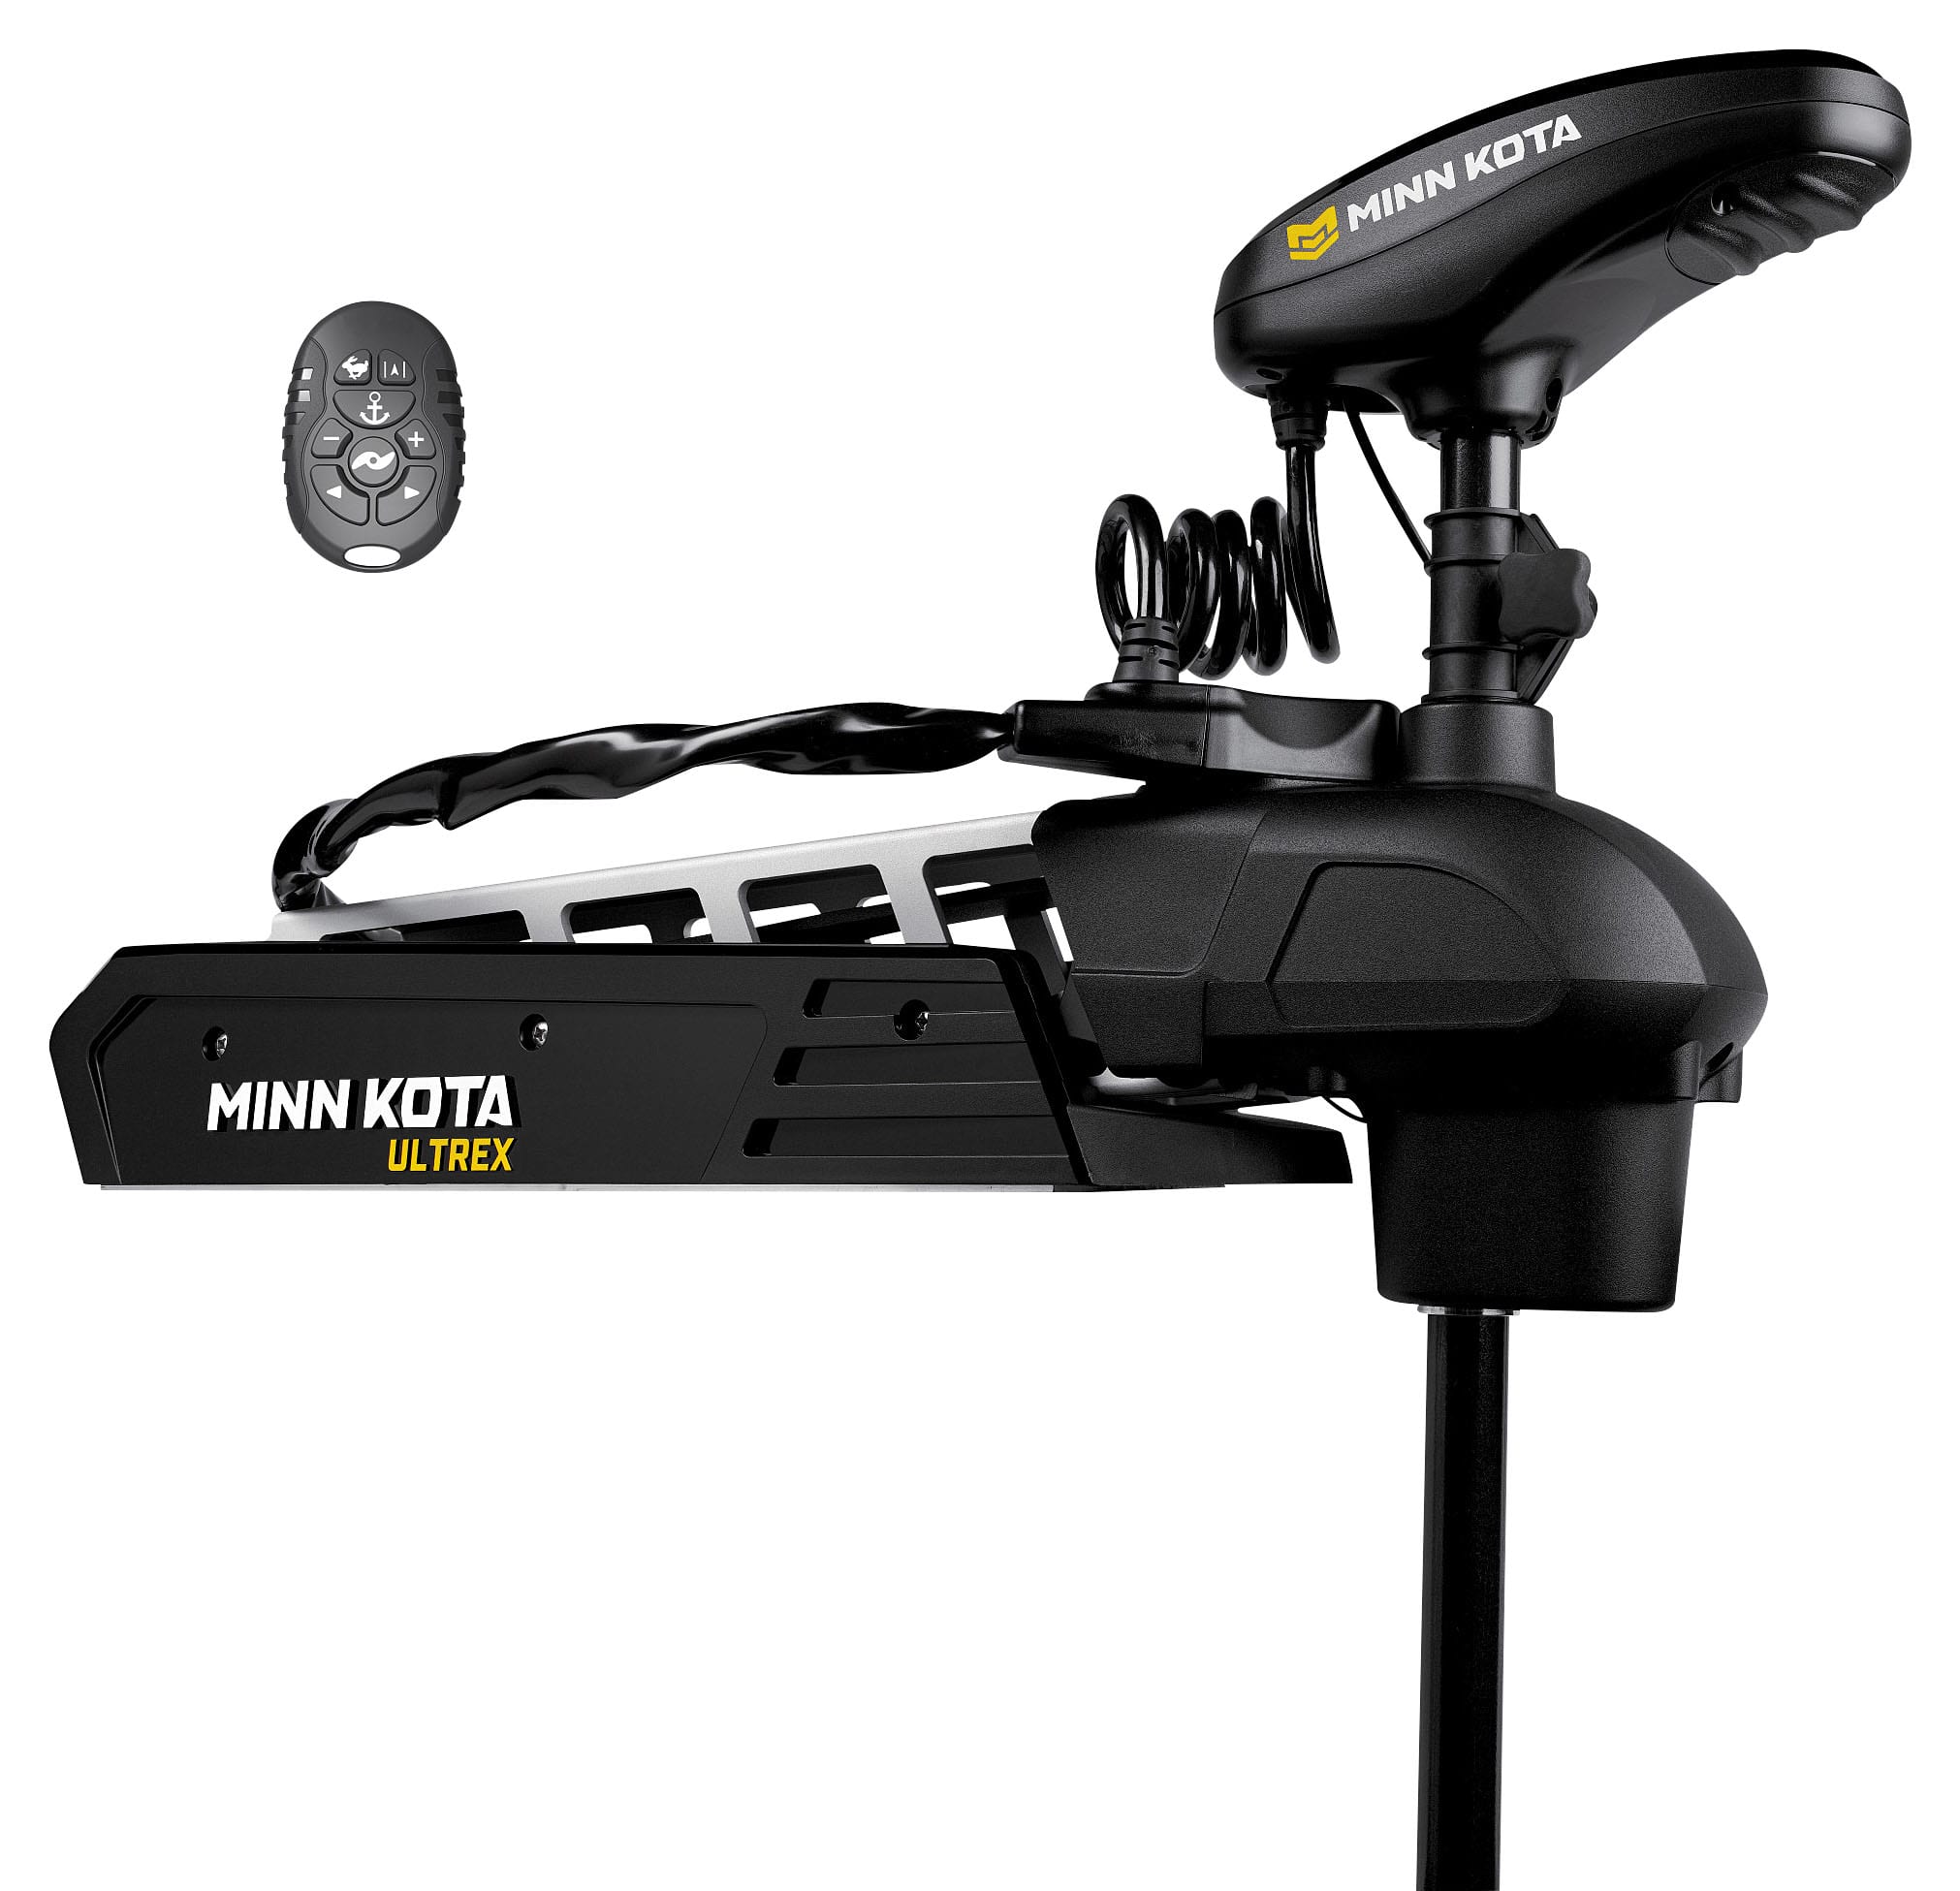 Minn Kota® Ultrex® 112lb 60" Freshwater Trolling Motor with Dual Spectrum CHIRP Sonar and Micro Remote